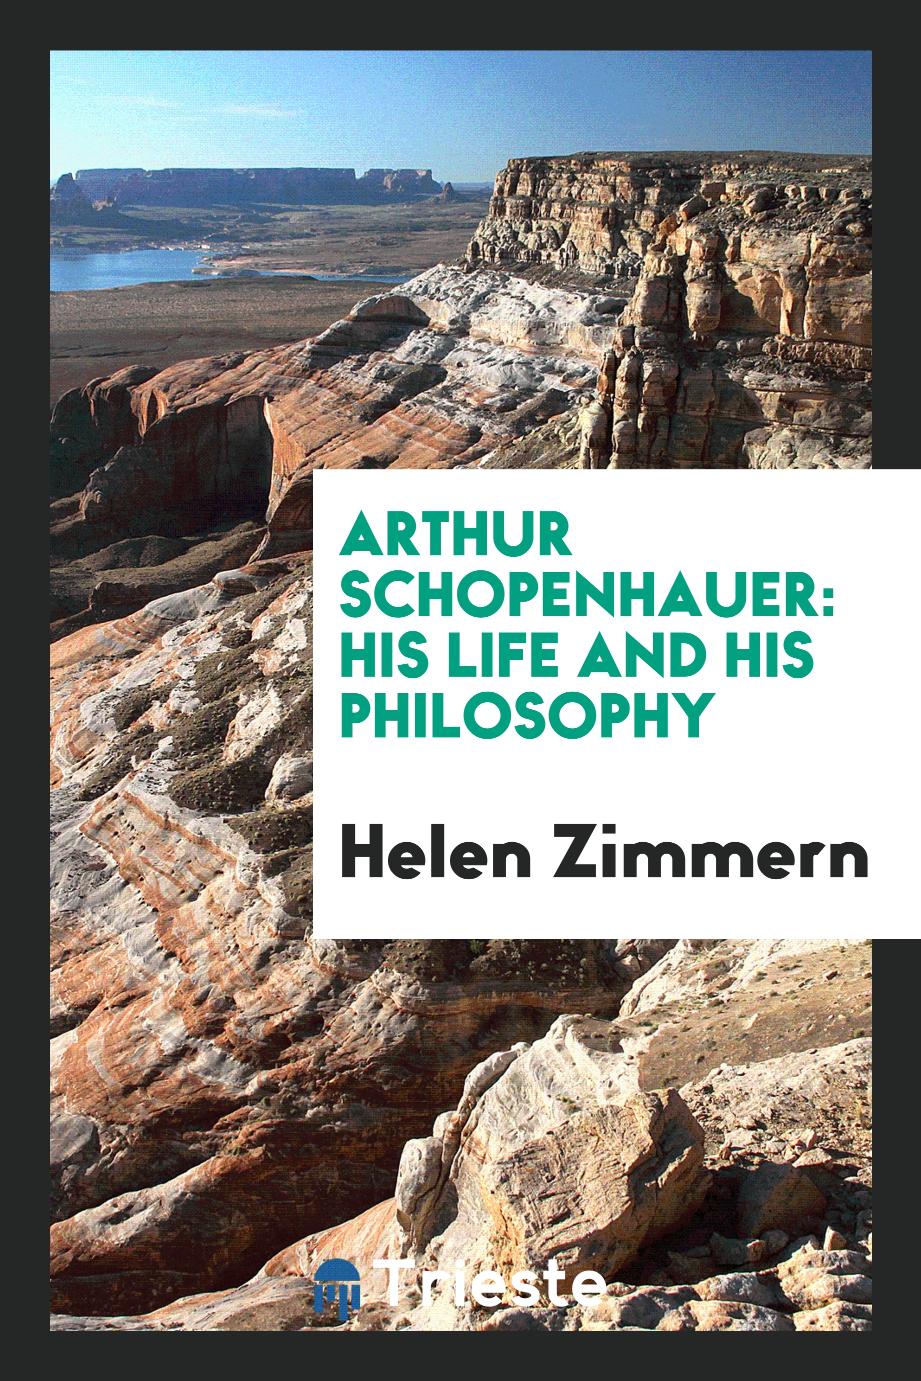 Arthur Schopenhauer: his life and his philosophy